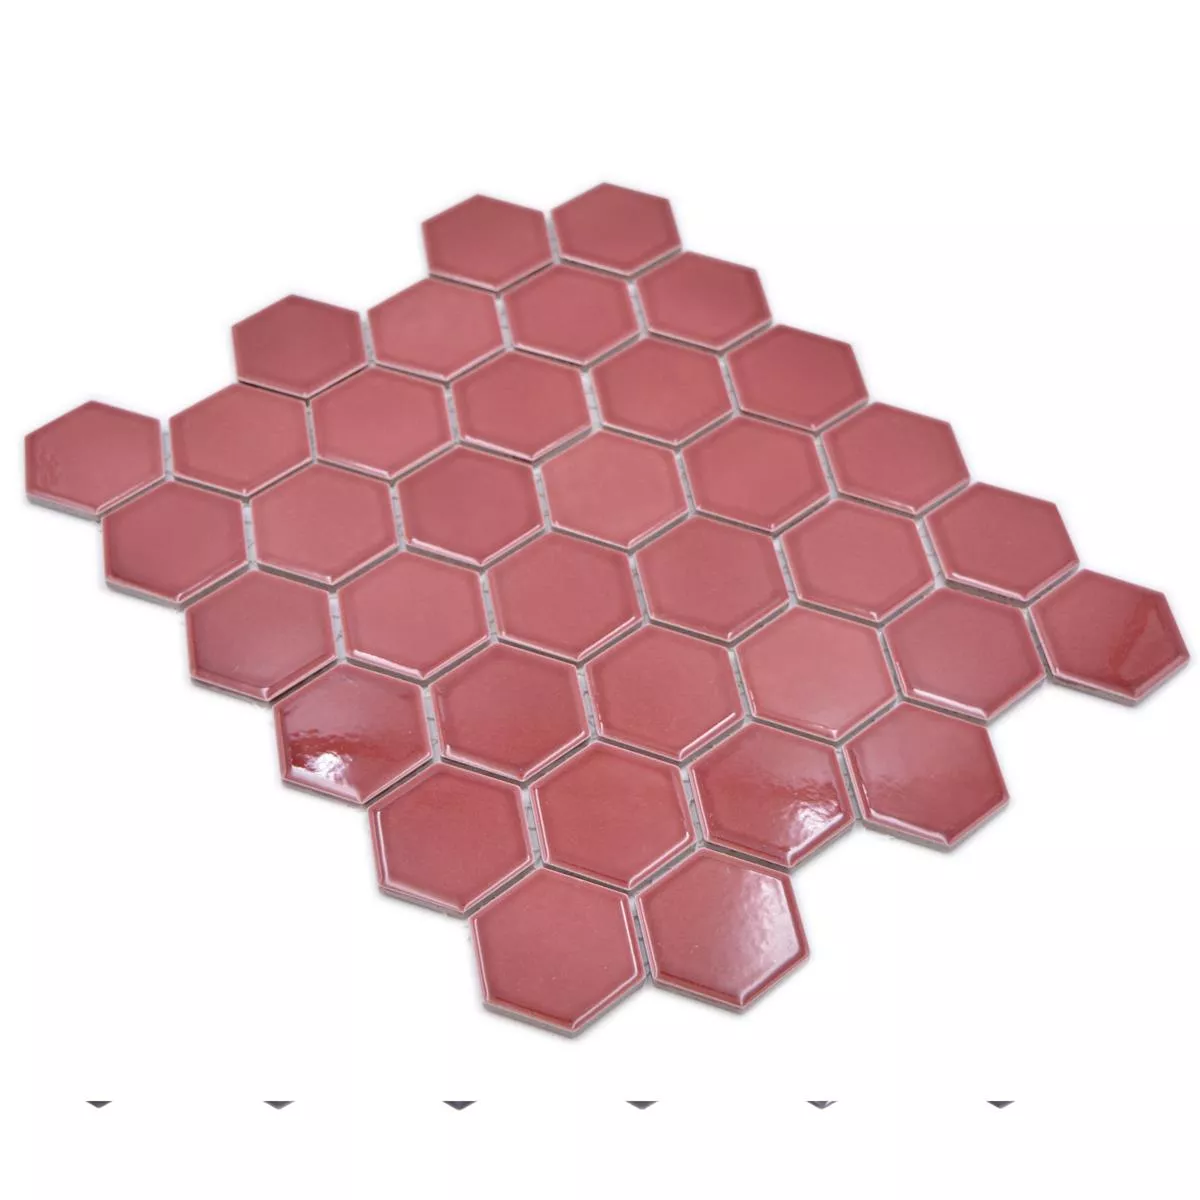 Keramikmosaik Salomon Hexagon Bordeaux Rot H51